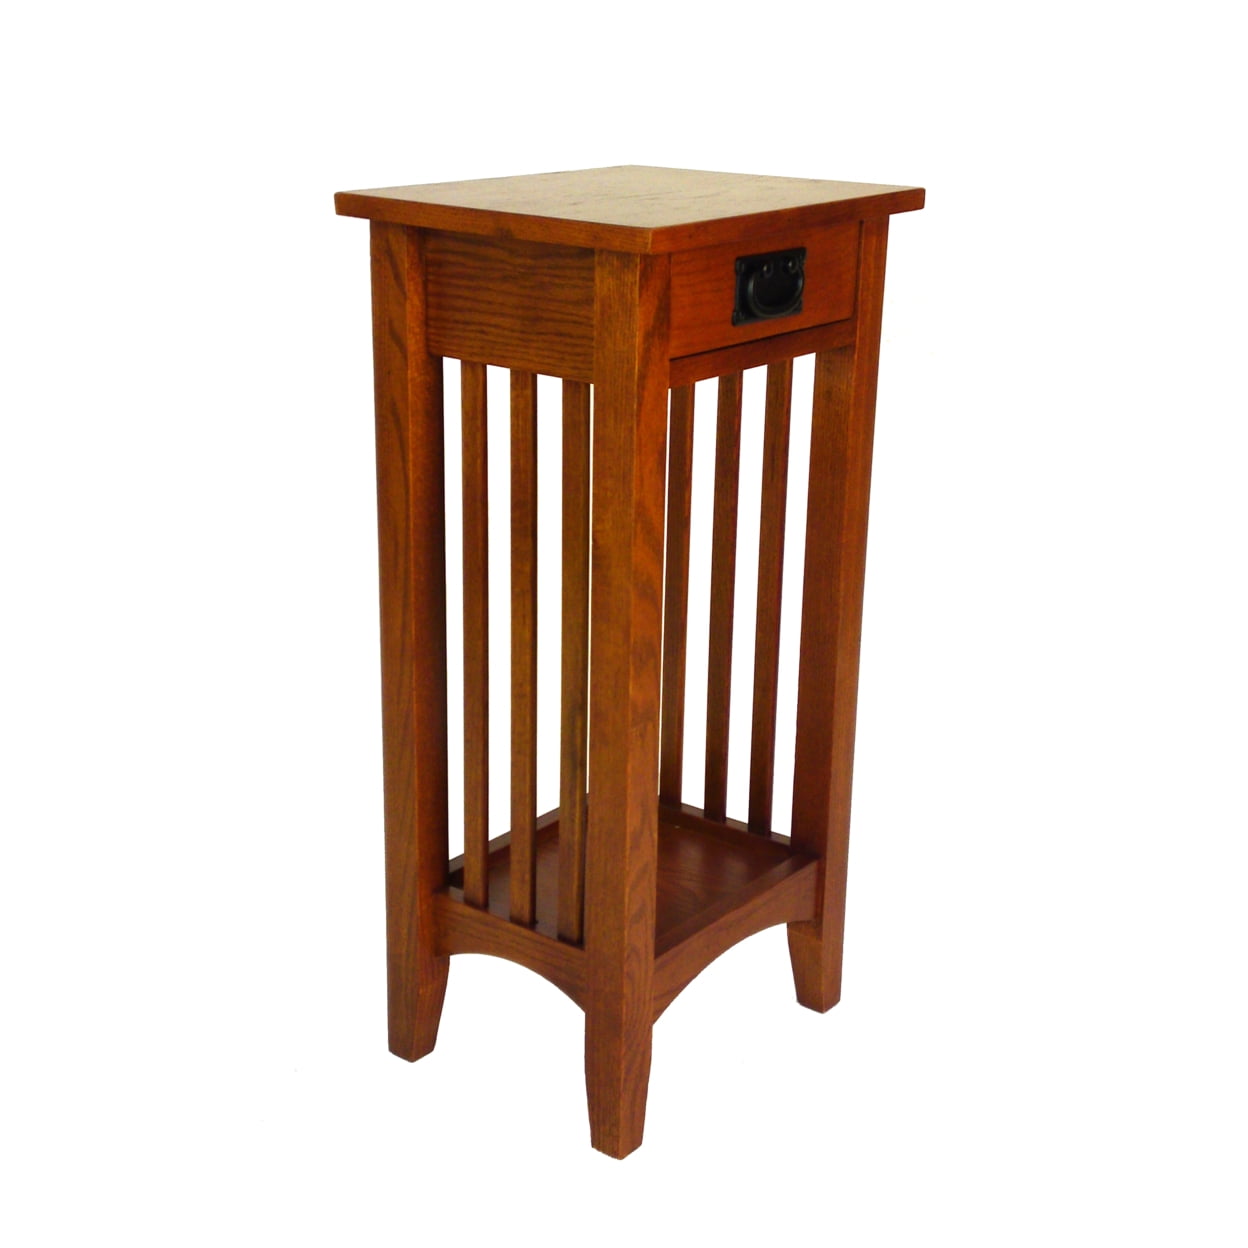 Bm210411 Wooden Pedestal Stand With 1 Drawer & Open Bottom Shelf, Oak Brown